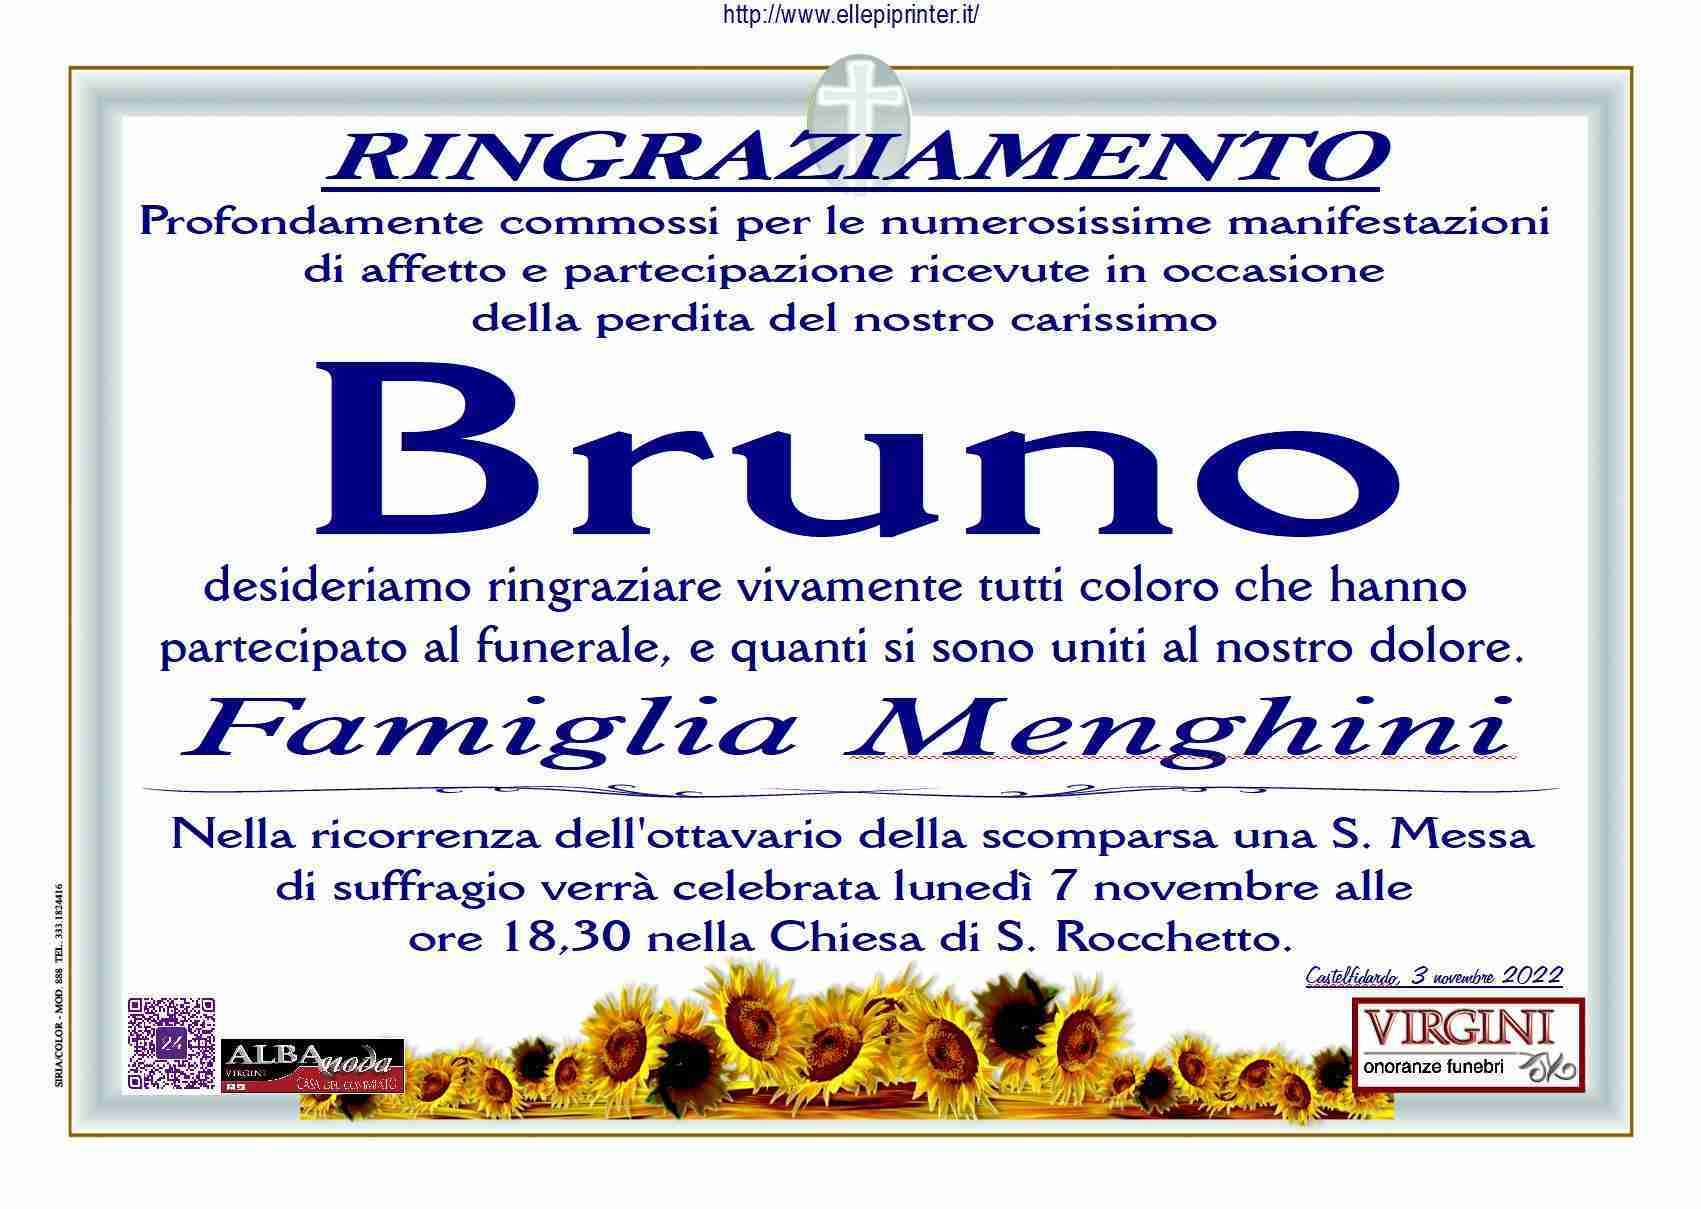 Bruno Menghini